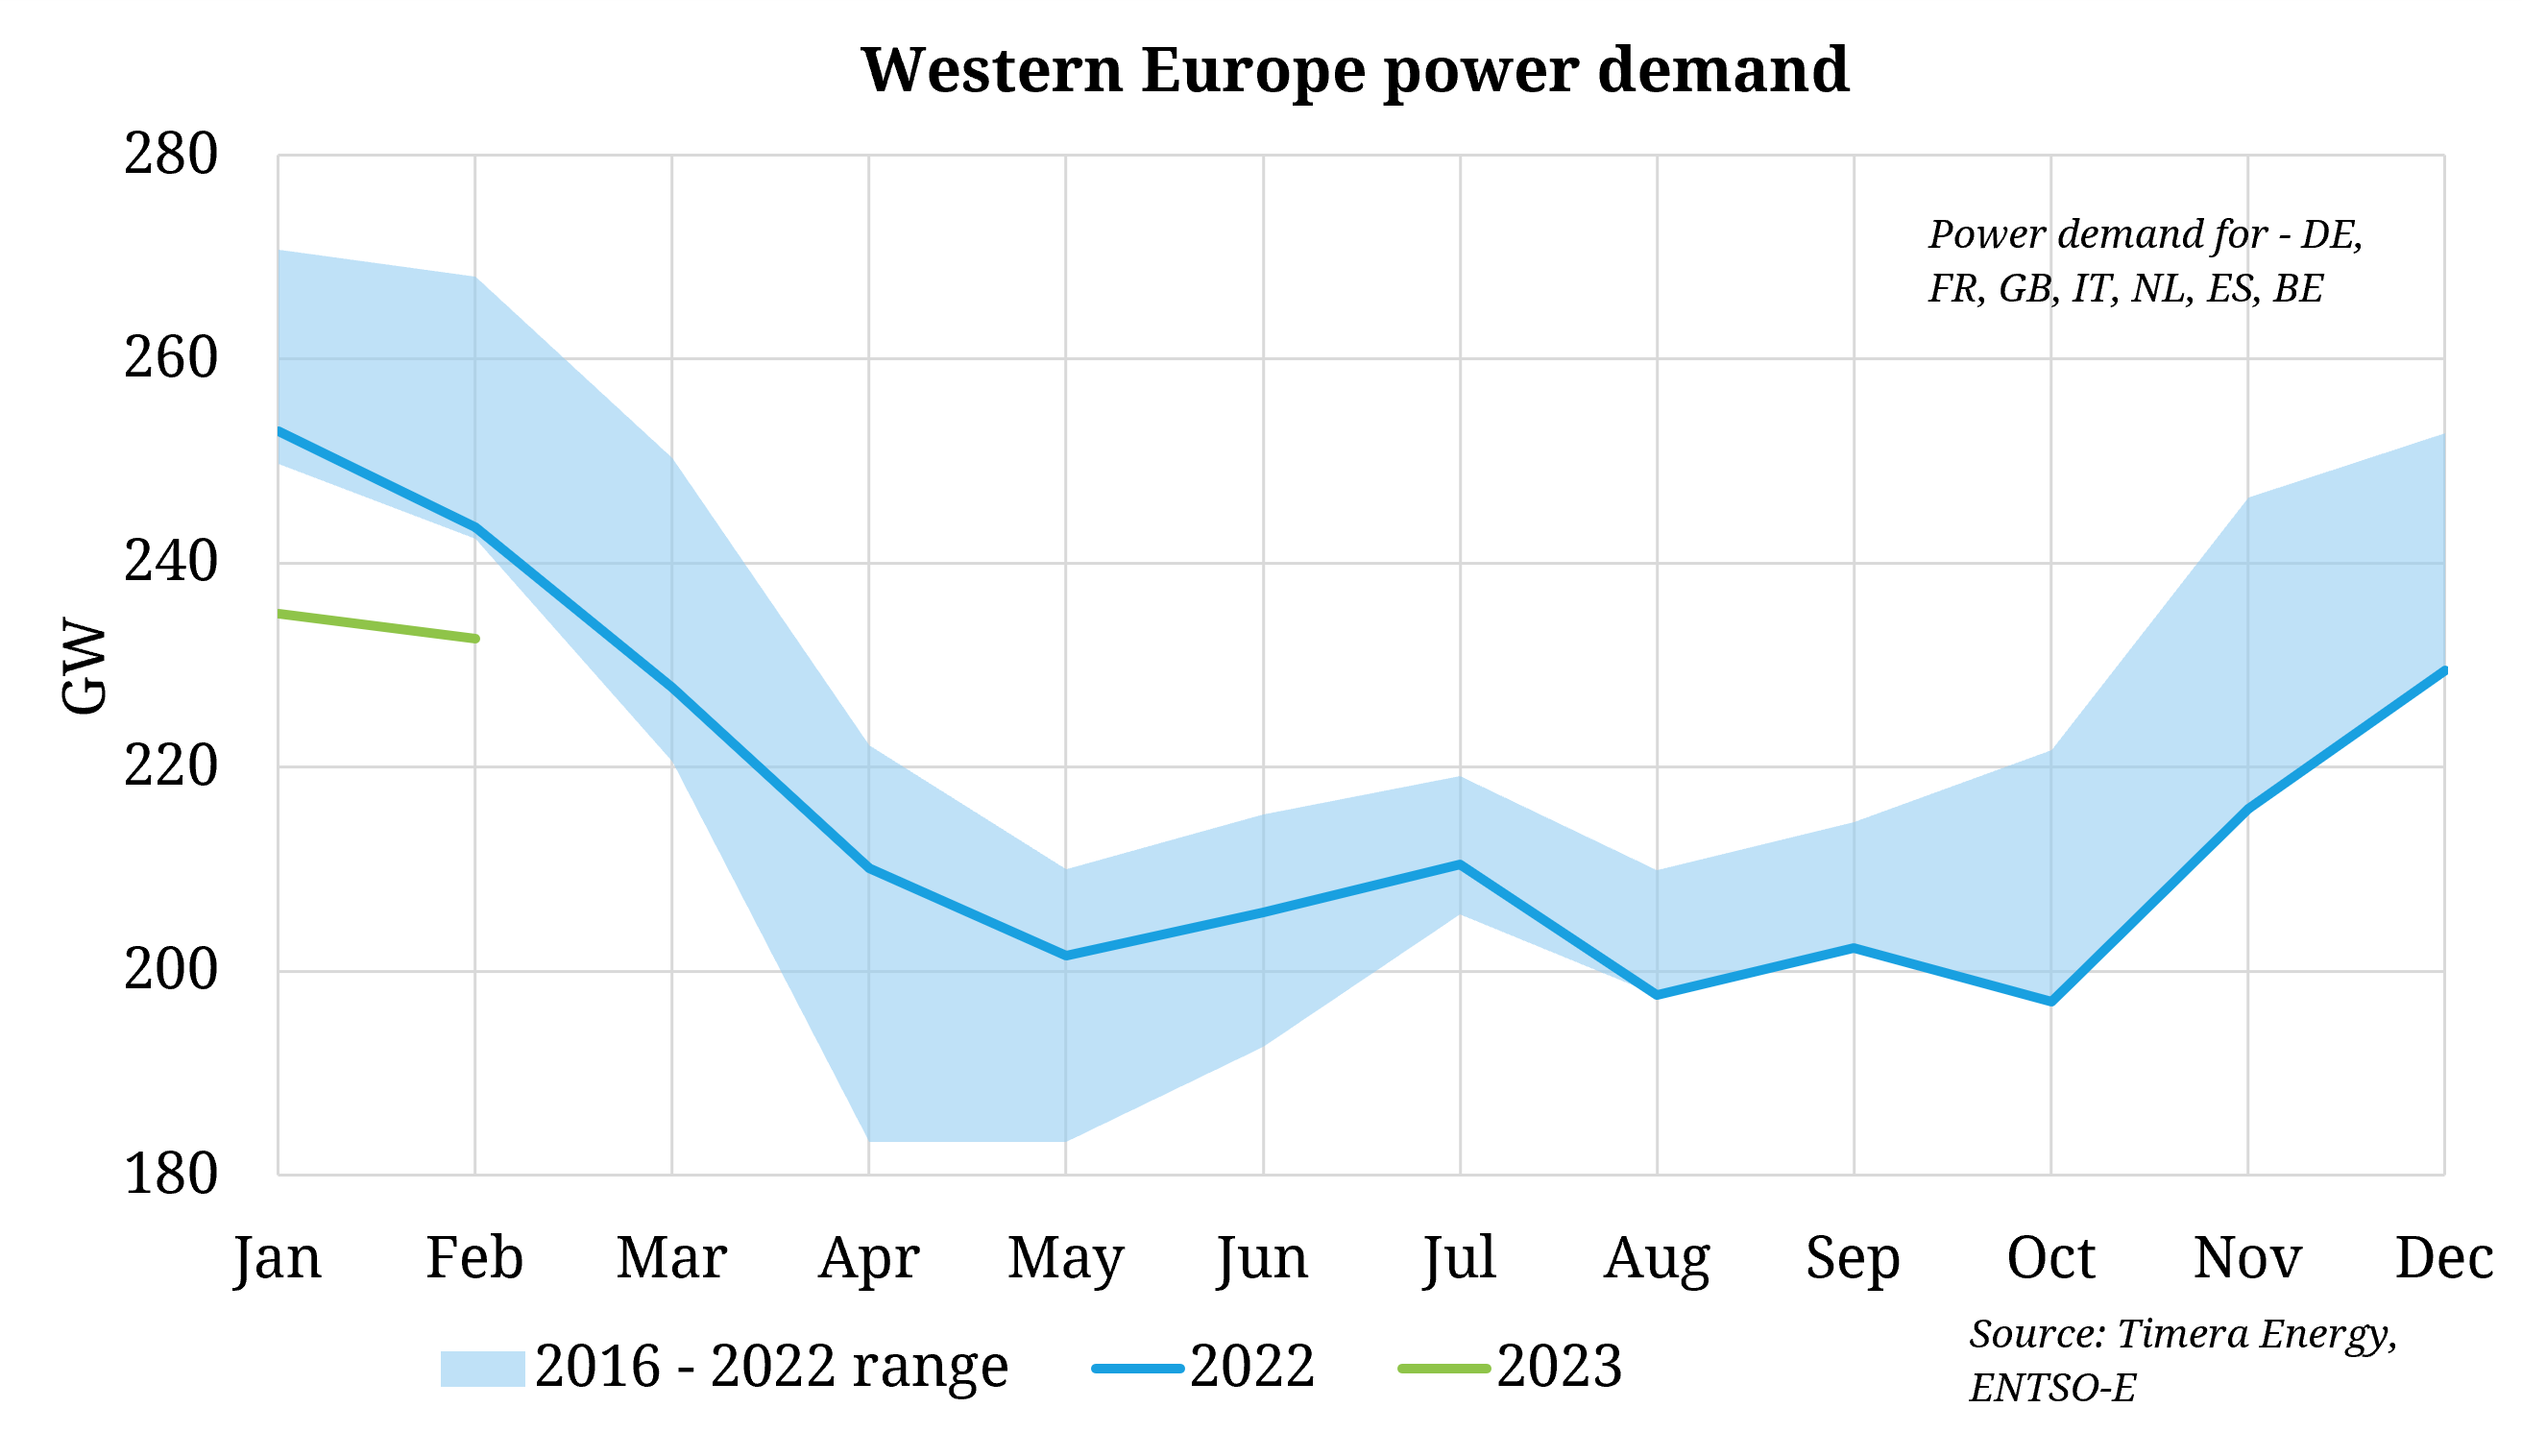 European power demand declines continue into 2023